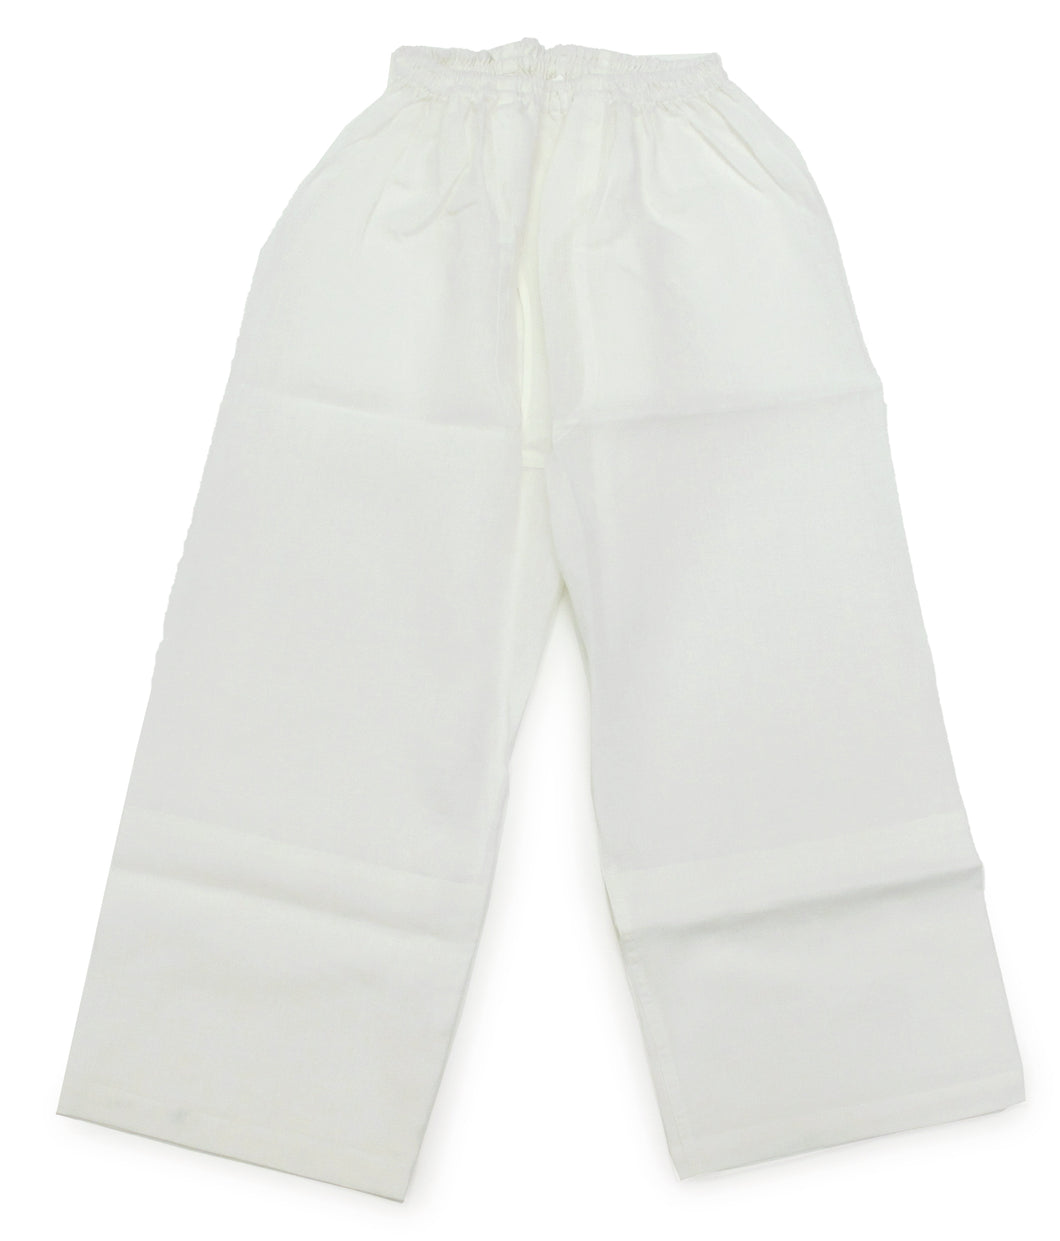 Men's kimono underwear, linen pants Steteco for Japanese Traditional Clothes